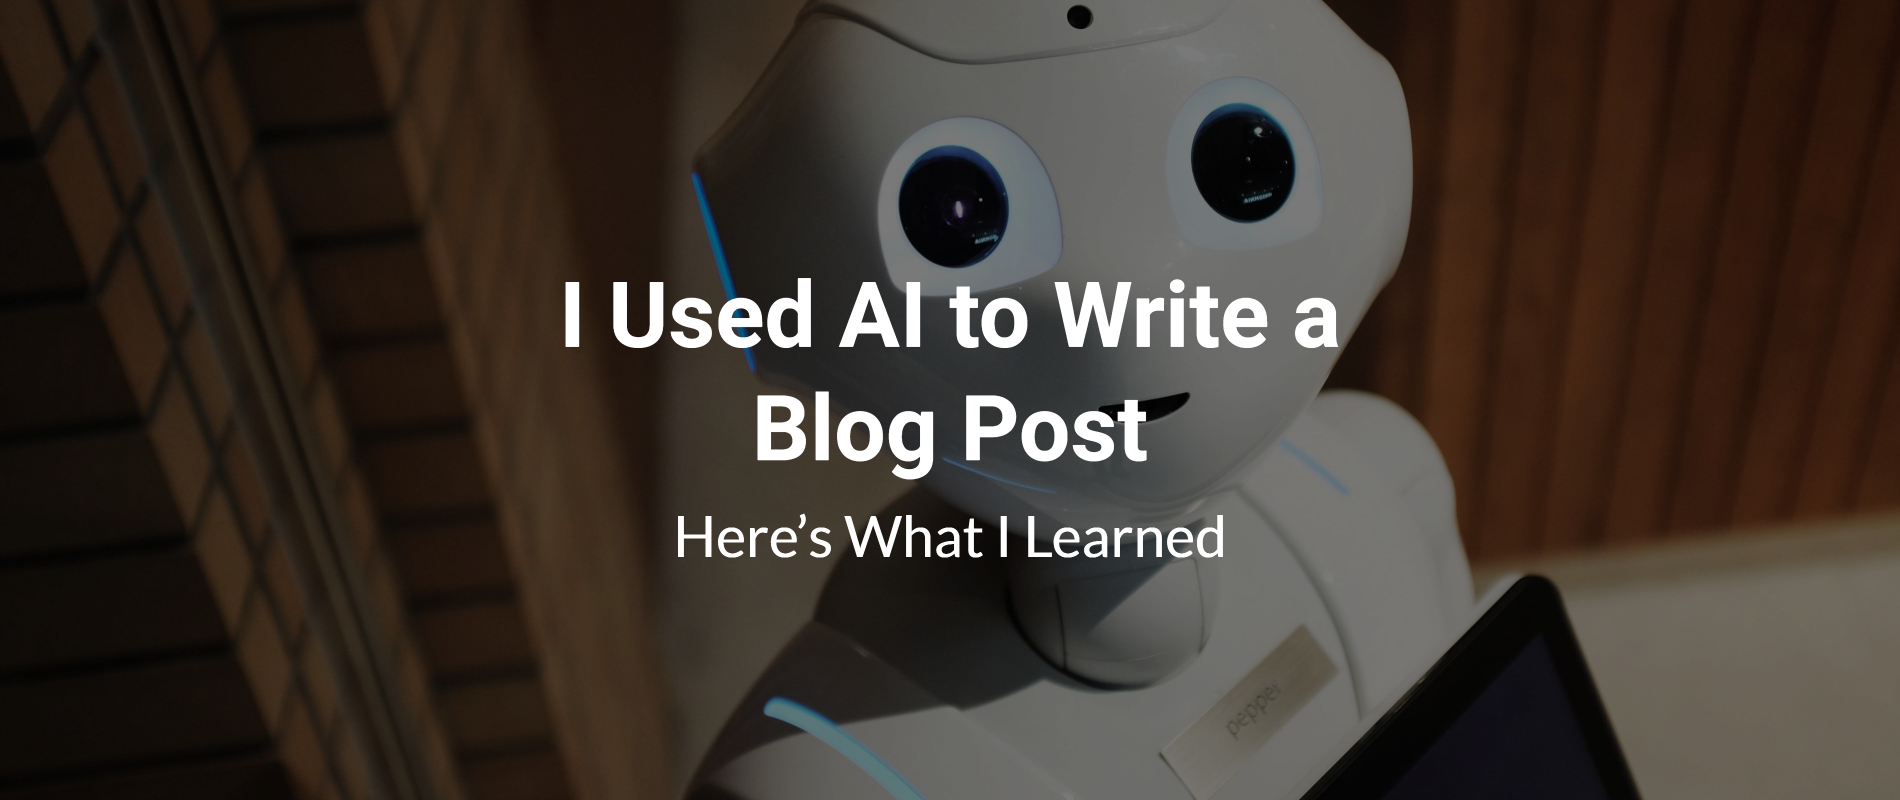 I Used AI to Write a Blog Post